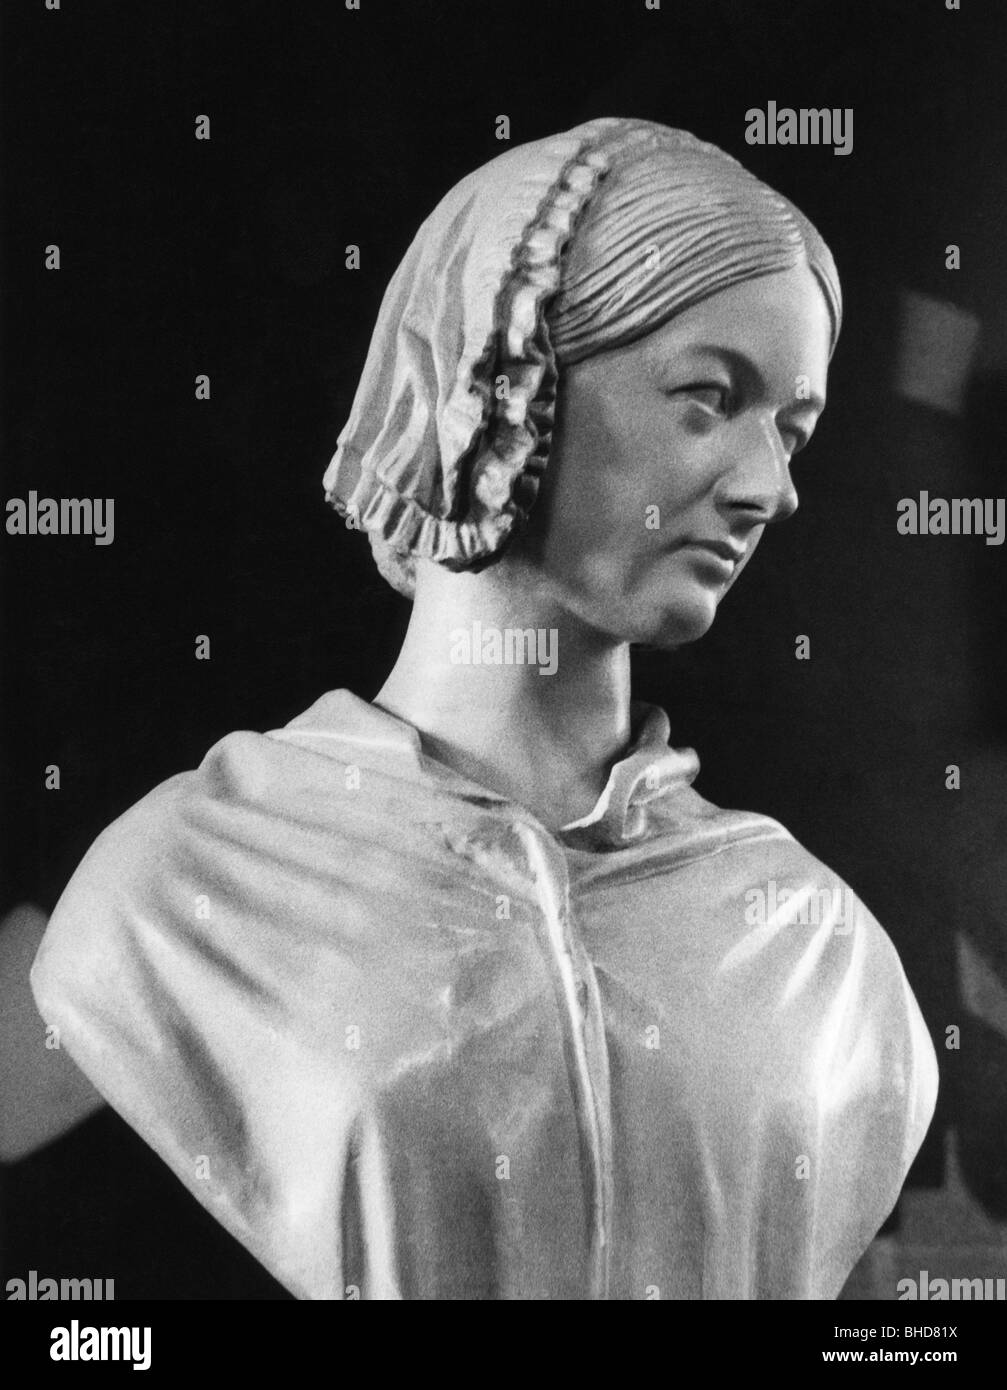 Nightingale, Florencia, 15.5.1820 - 13.8.1910, enfermera británica, retrato, busto, escultura de John Robert Steell, 1862, , Foto de stock